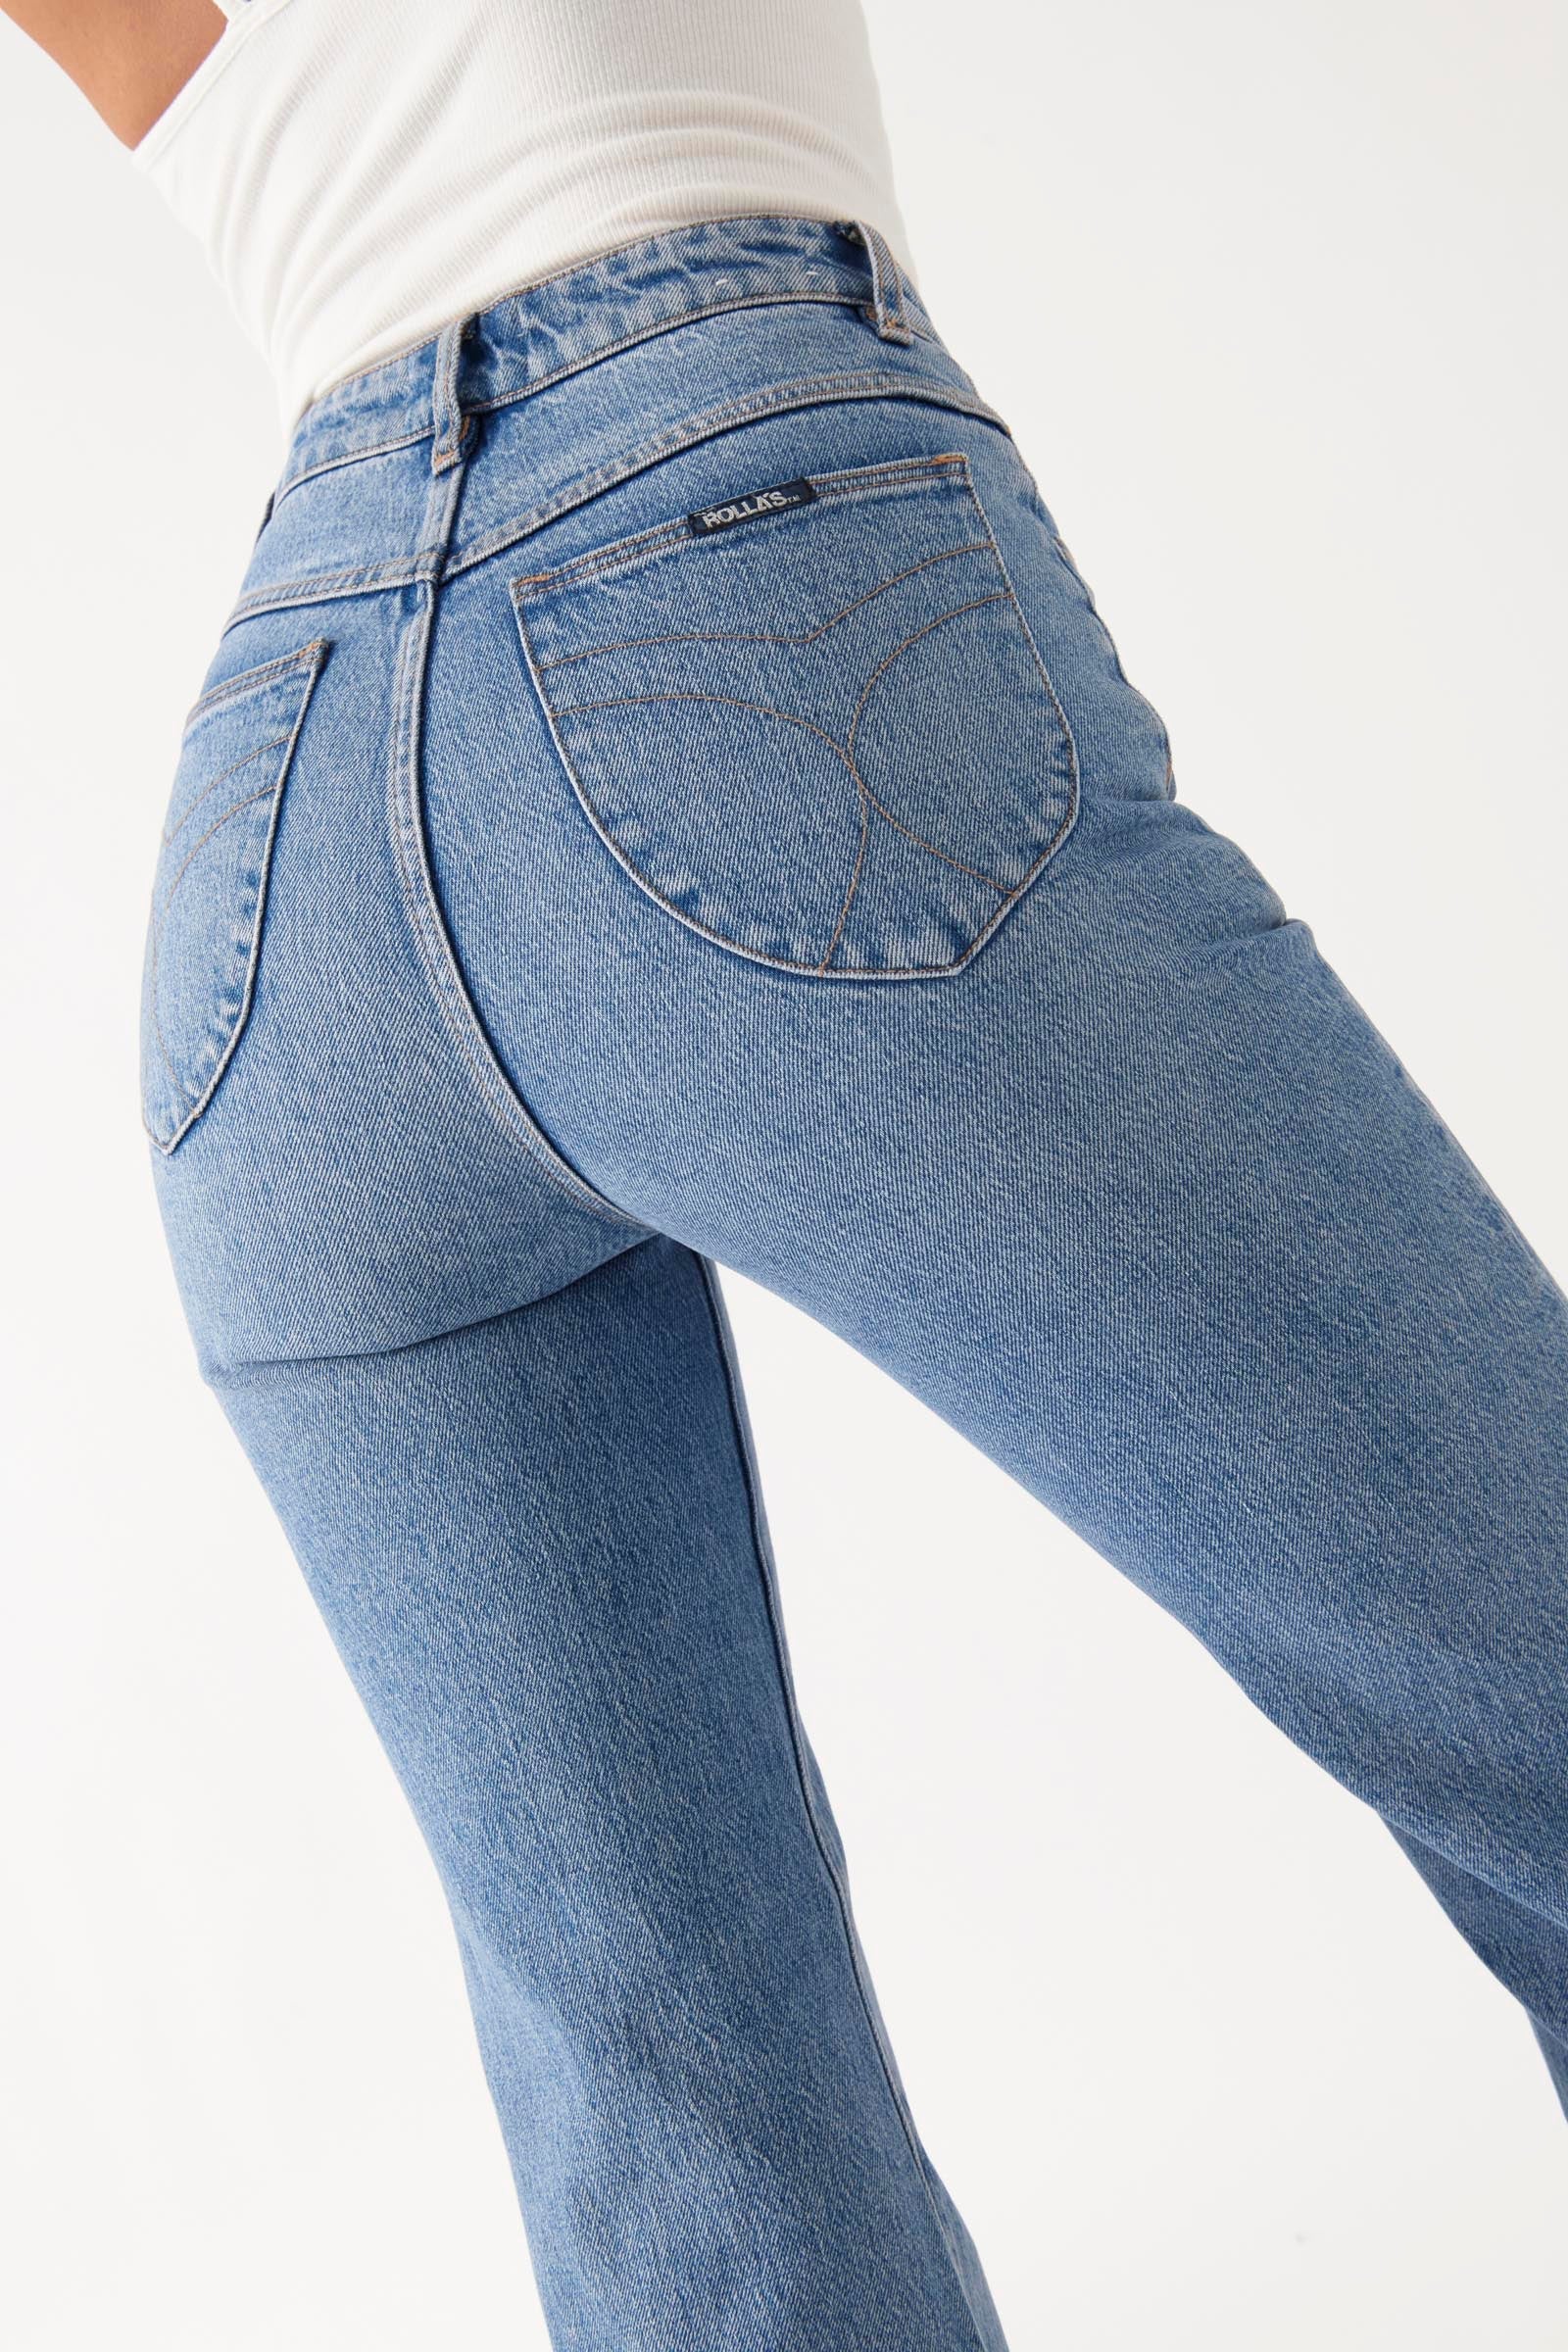 Rolla's Jeans - Vintage Inspired Denim & Denim Online